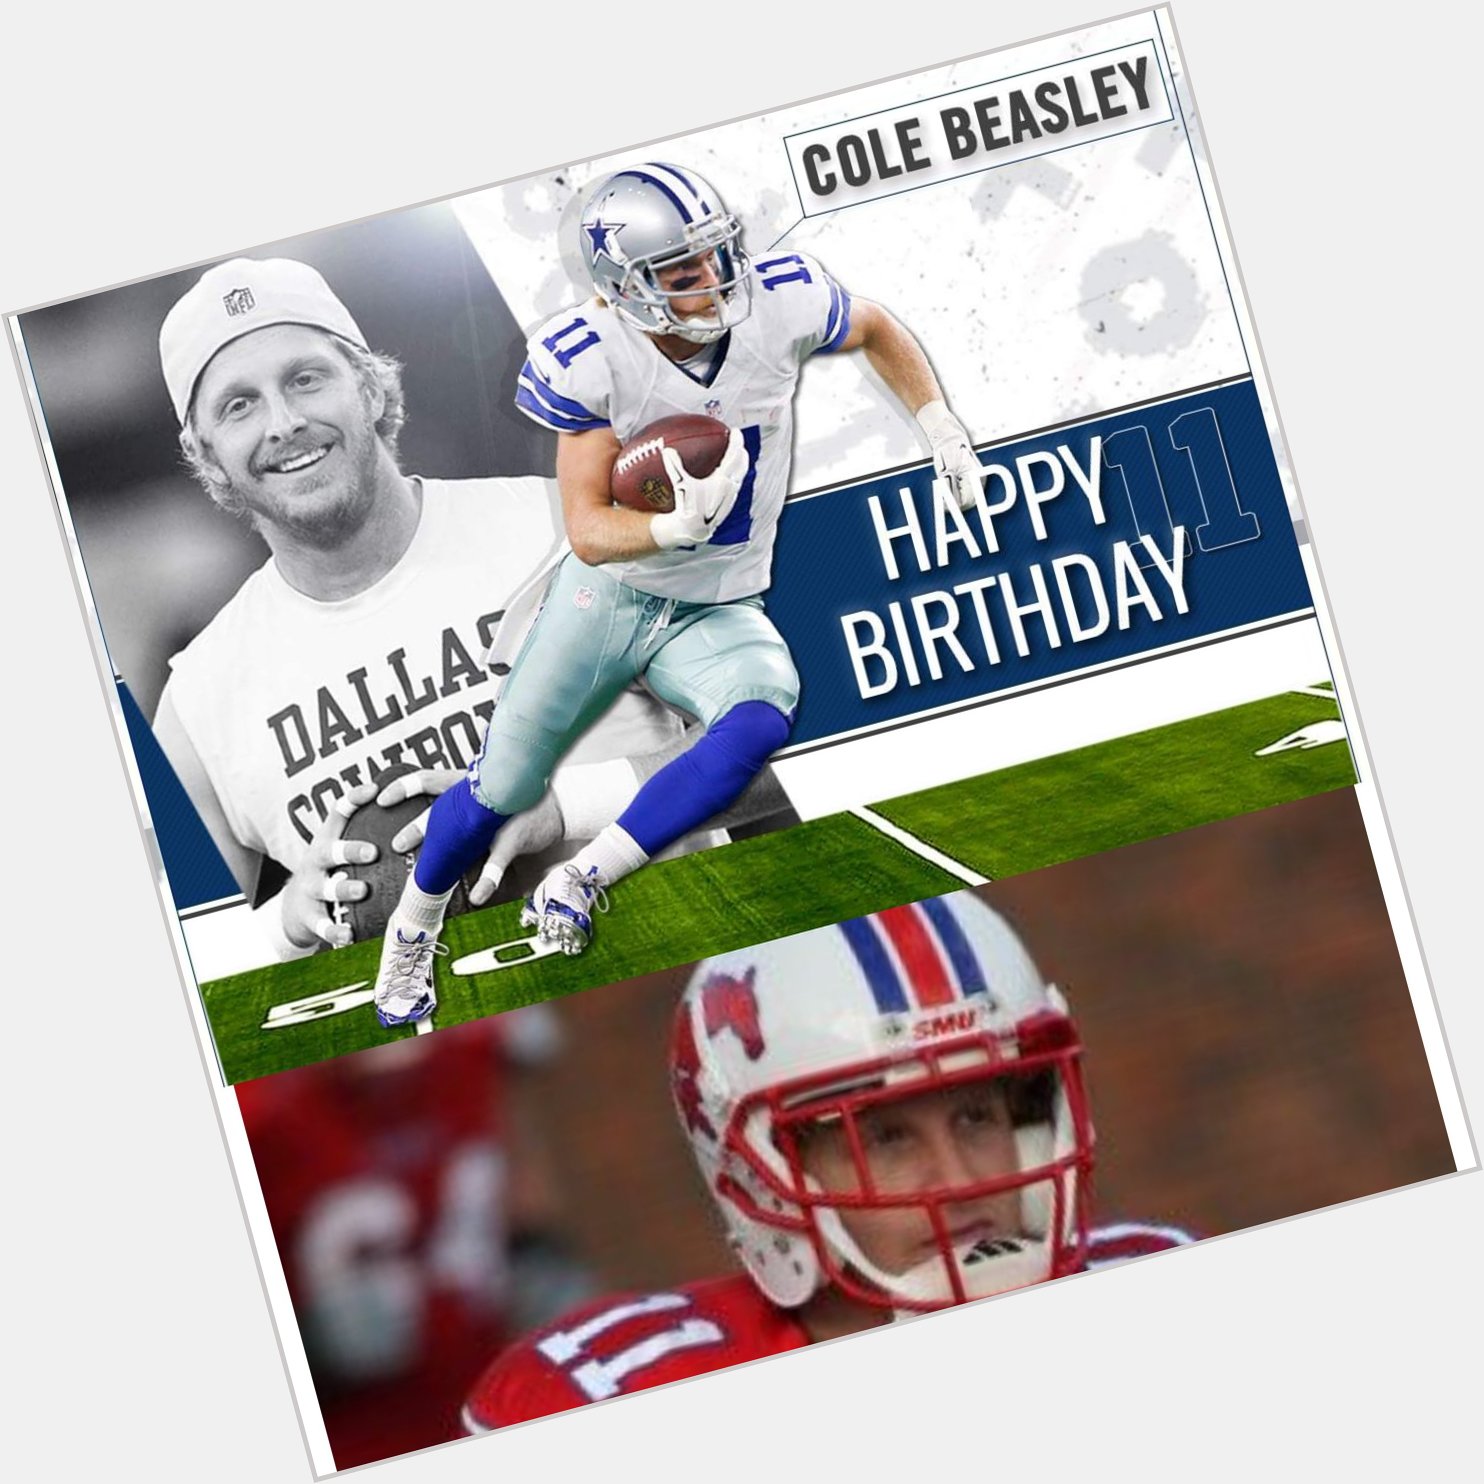 Happy Birthday, Cole Beasley!   